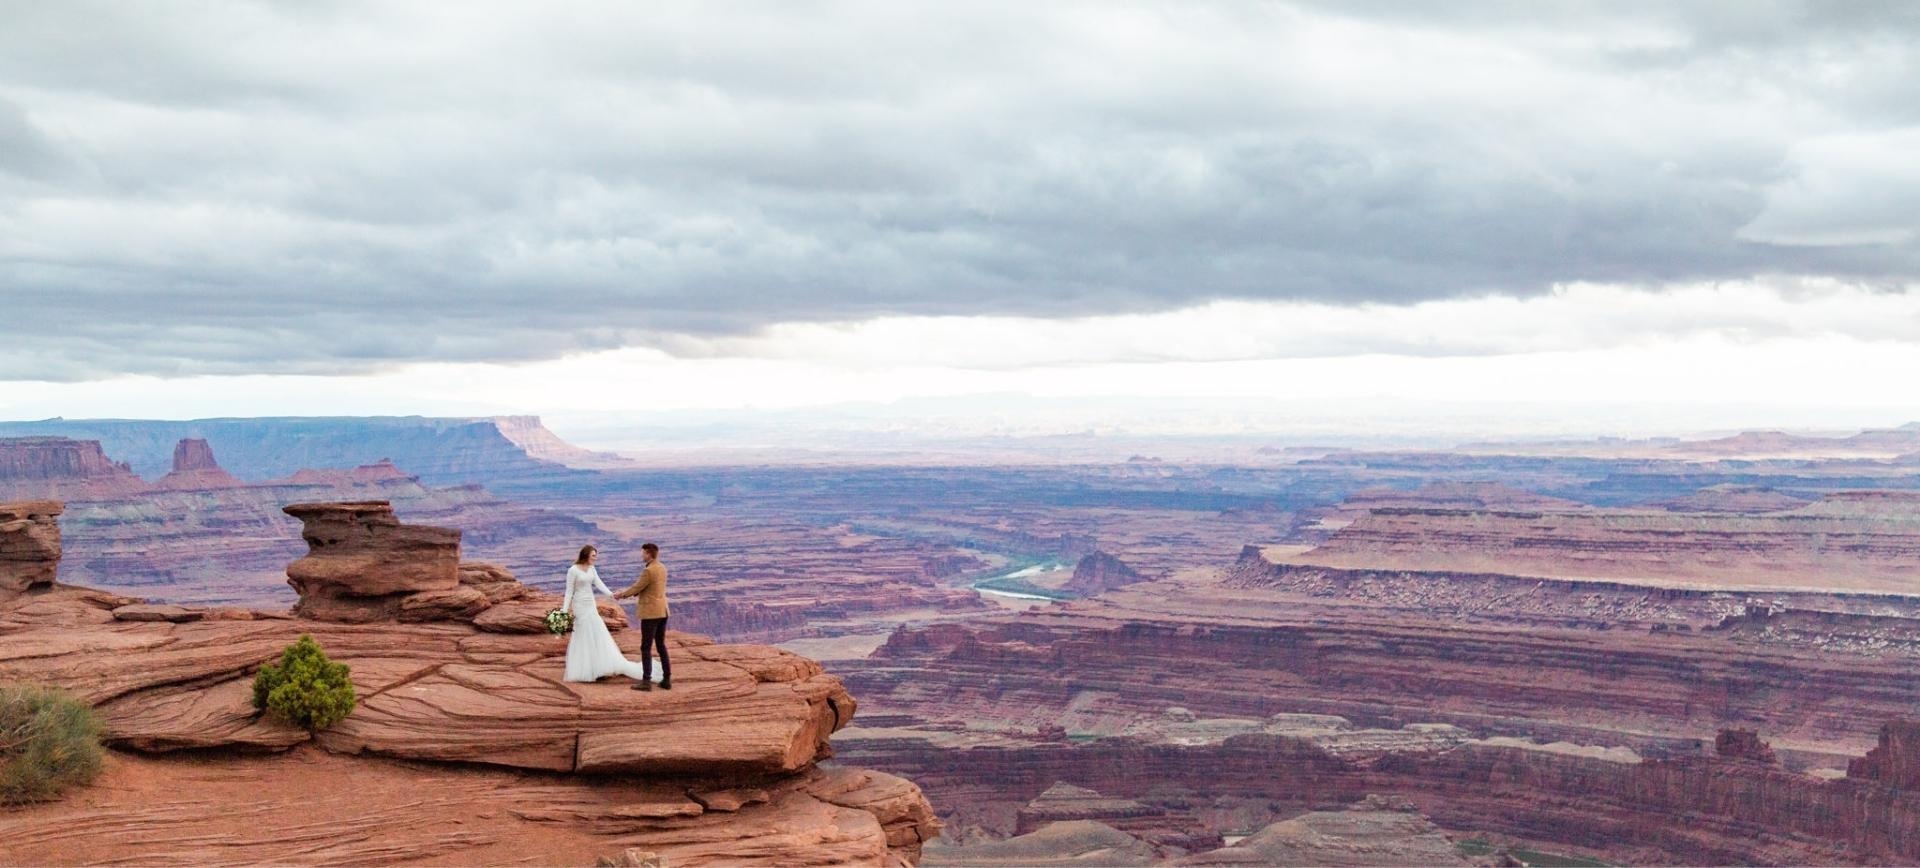 sunrise to sunset adventure elopement in moab - full day adventure wedding